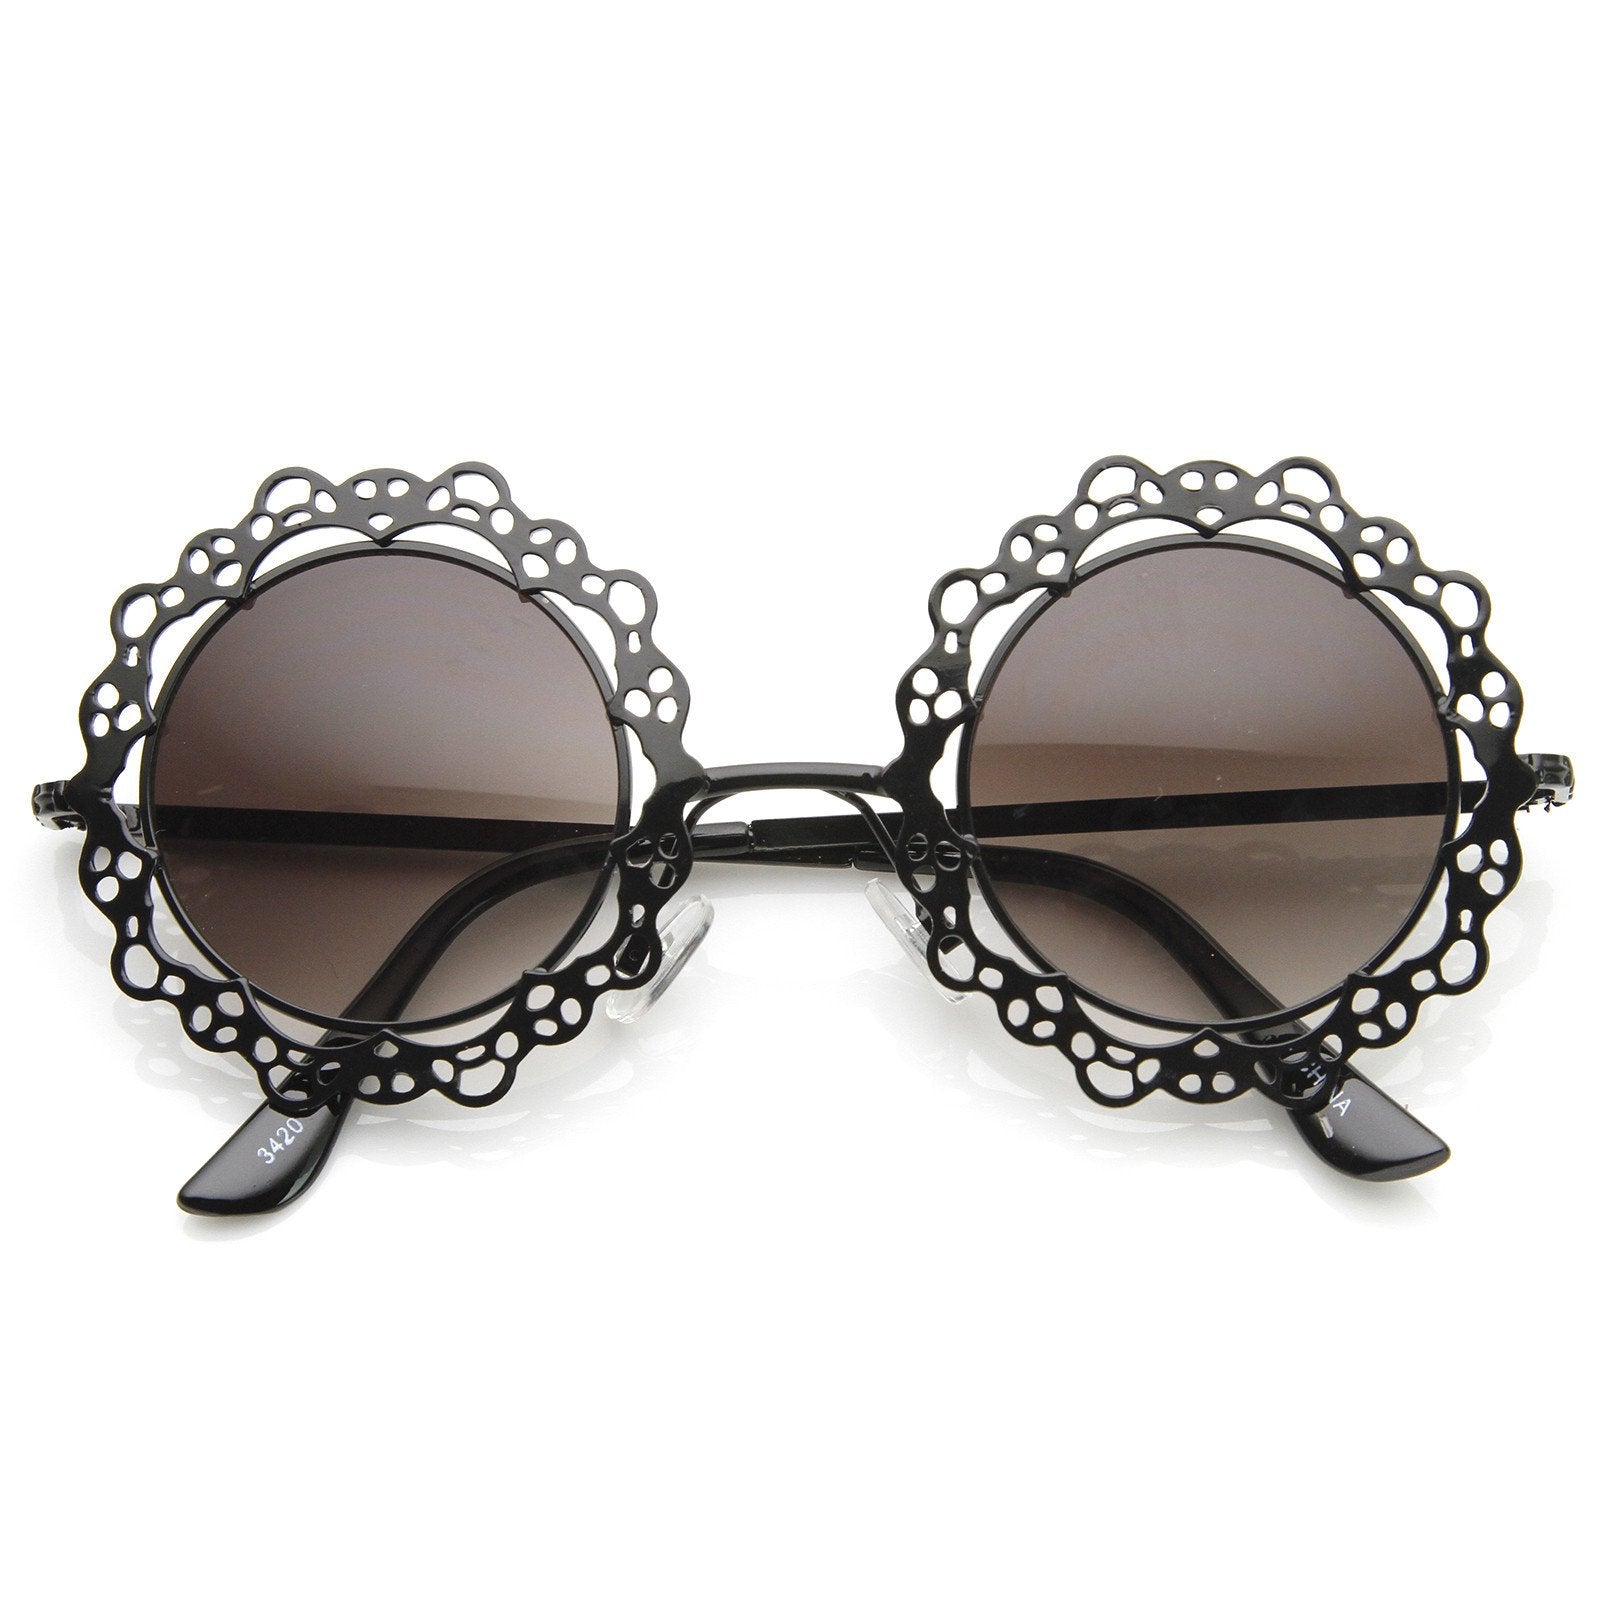 Retro Full Metal Frame Slim Curved Temple Round Sunglasses 54mm